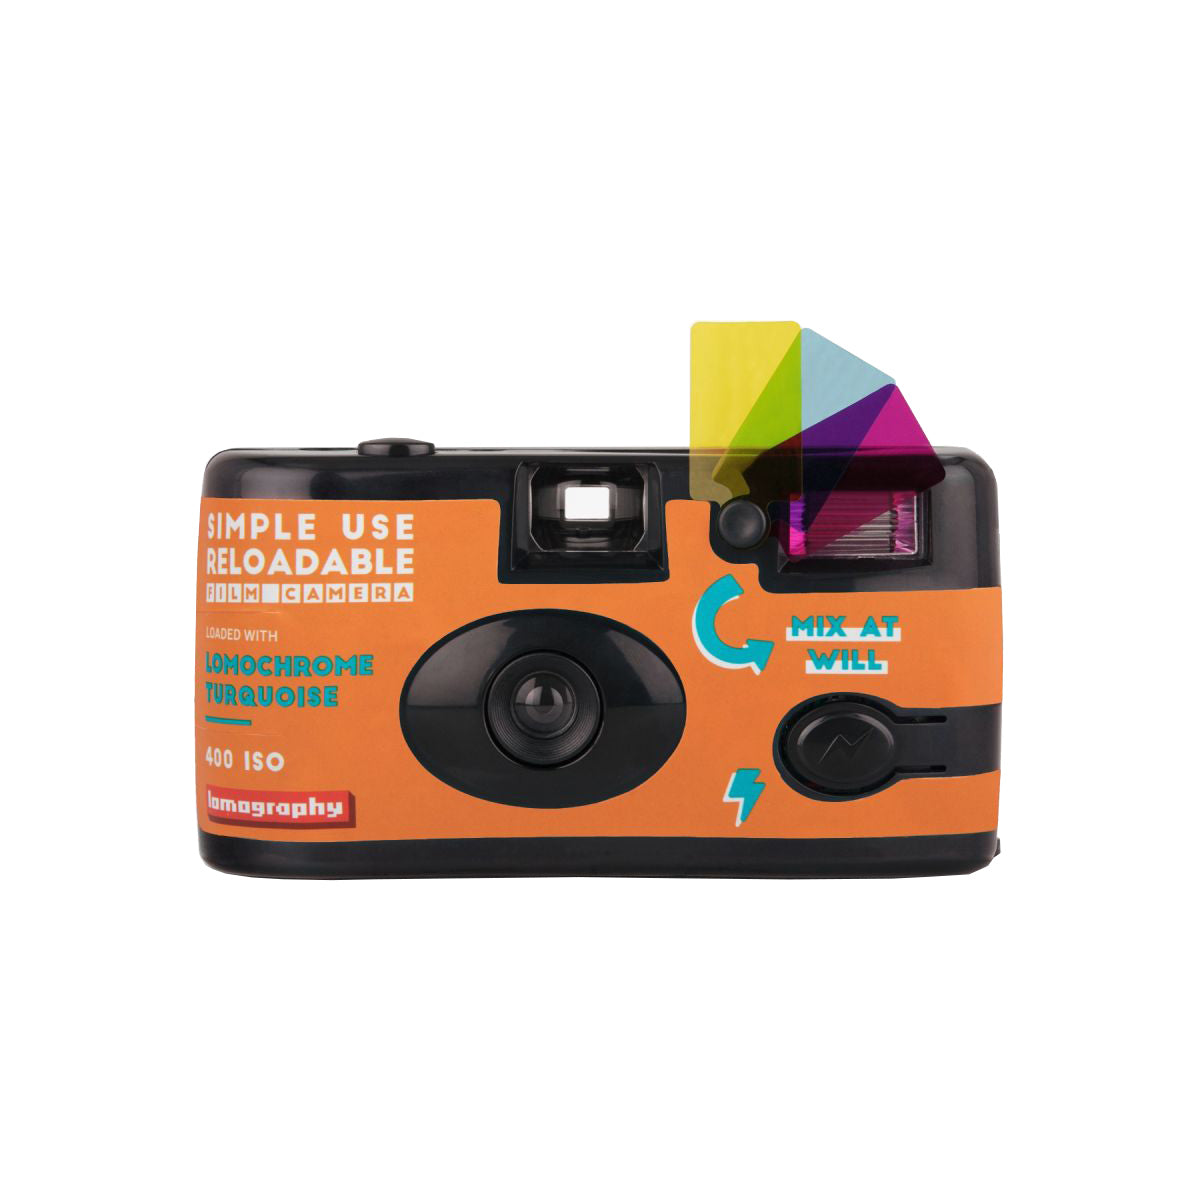 Lomo Simple Use Reusable Film Camera - LomoChrome Turquoise